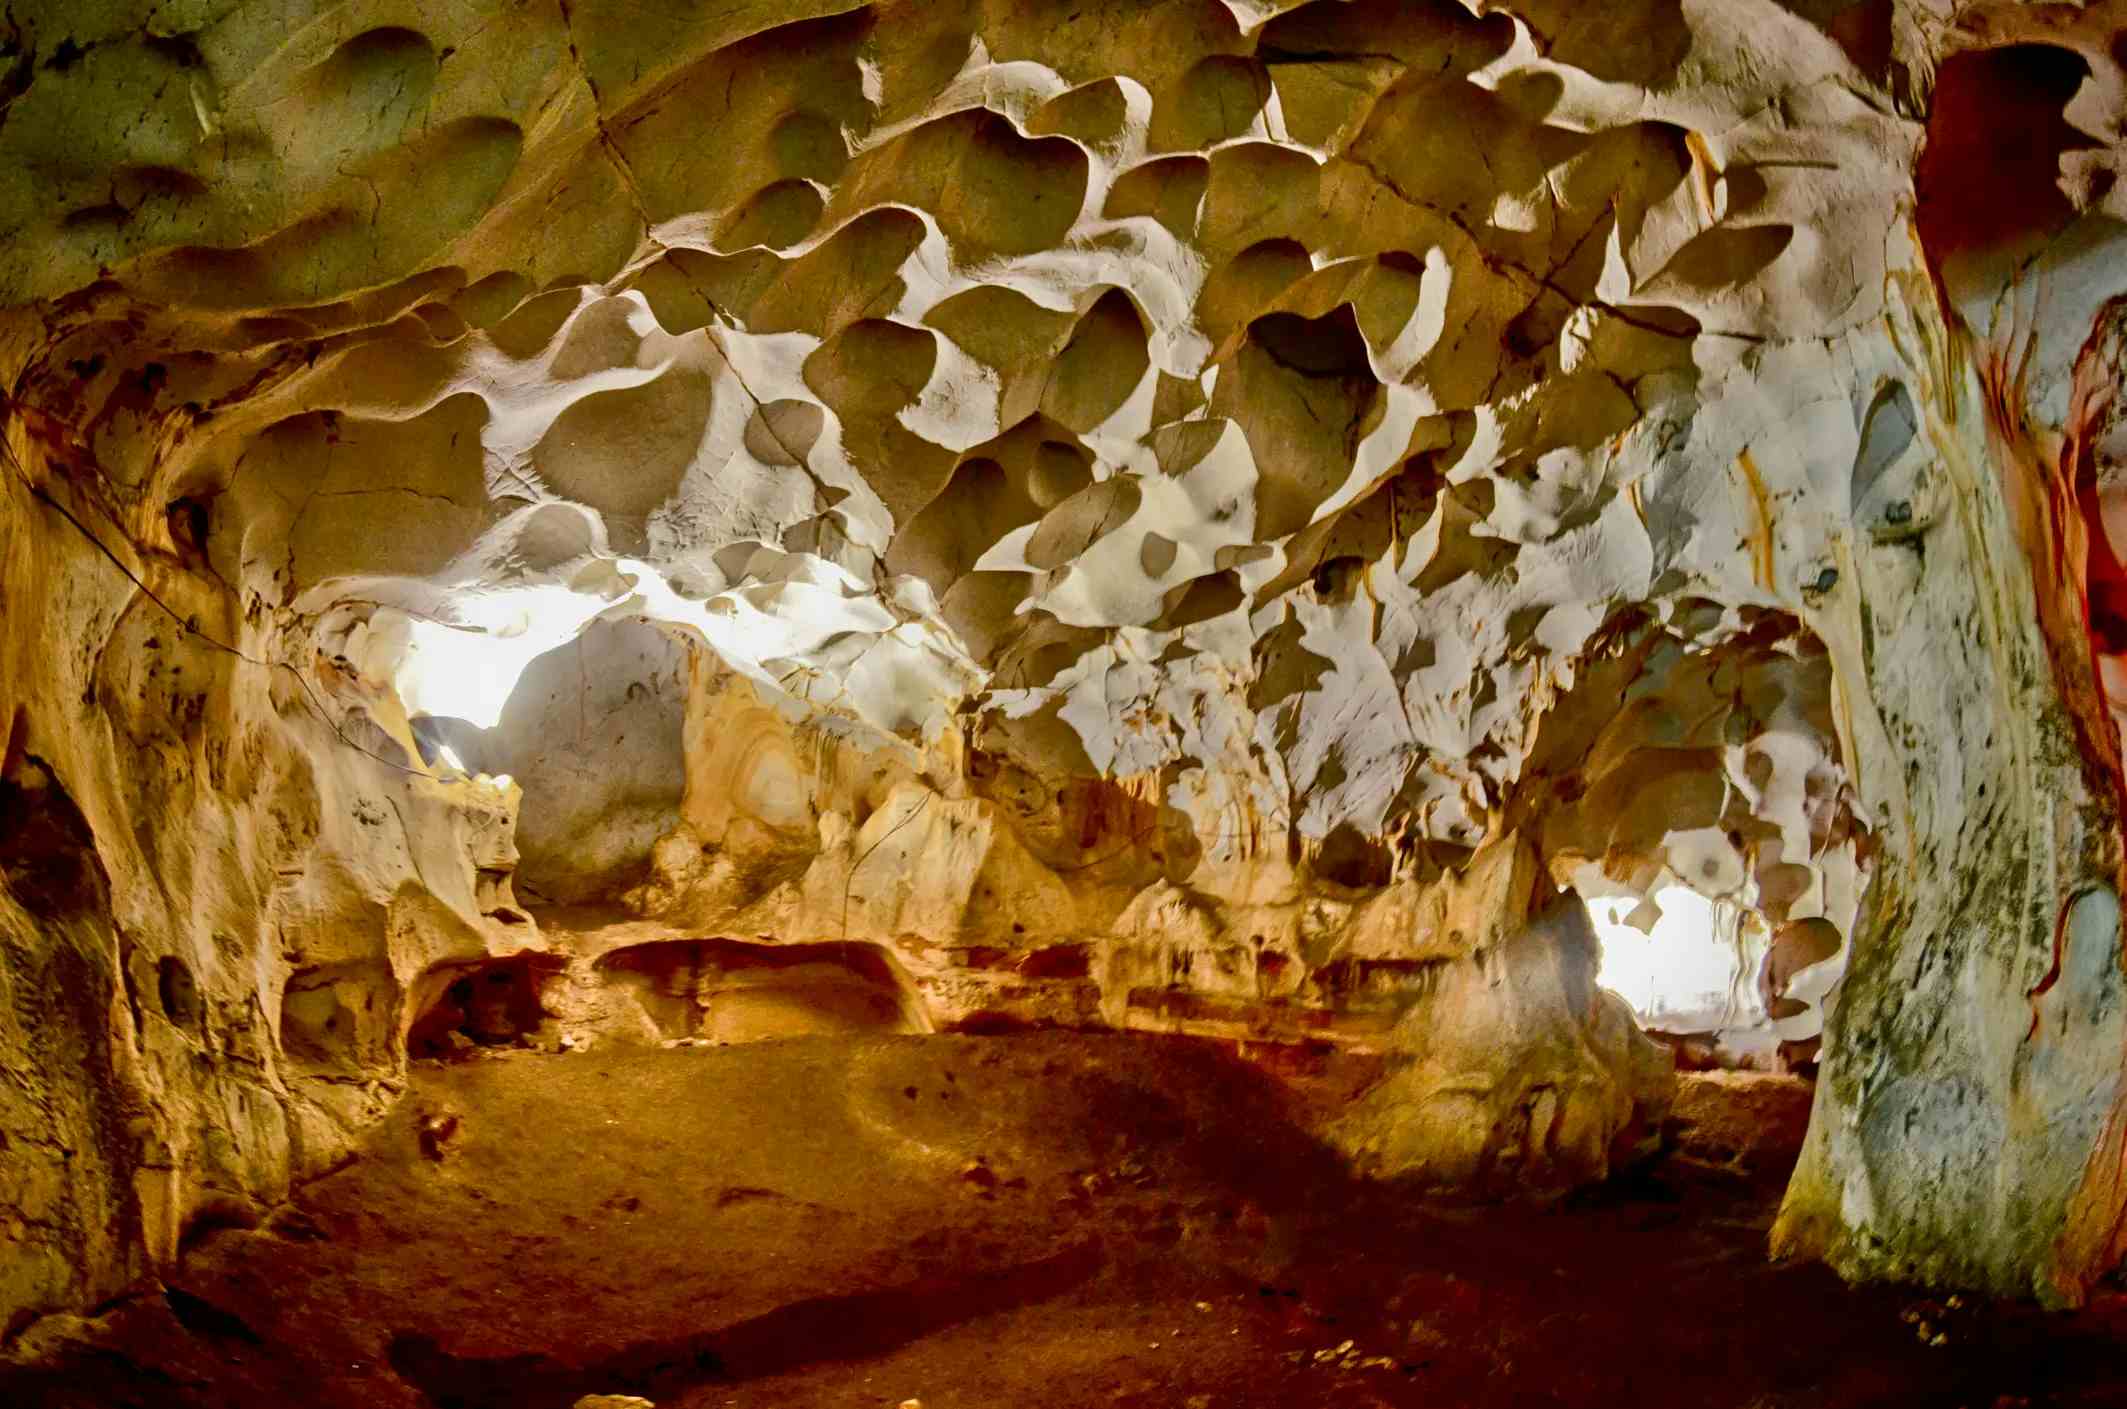 Cueva de Karain image